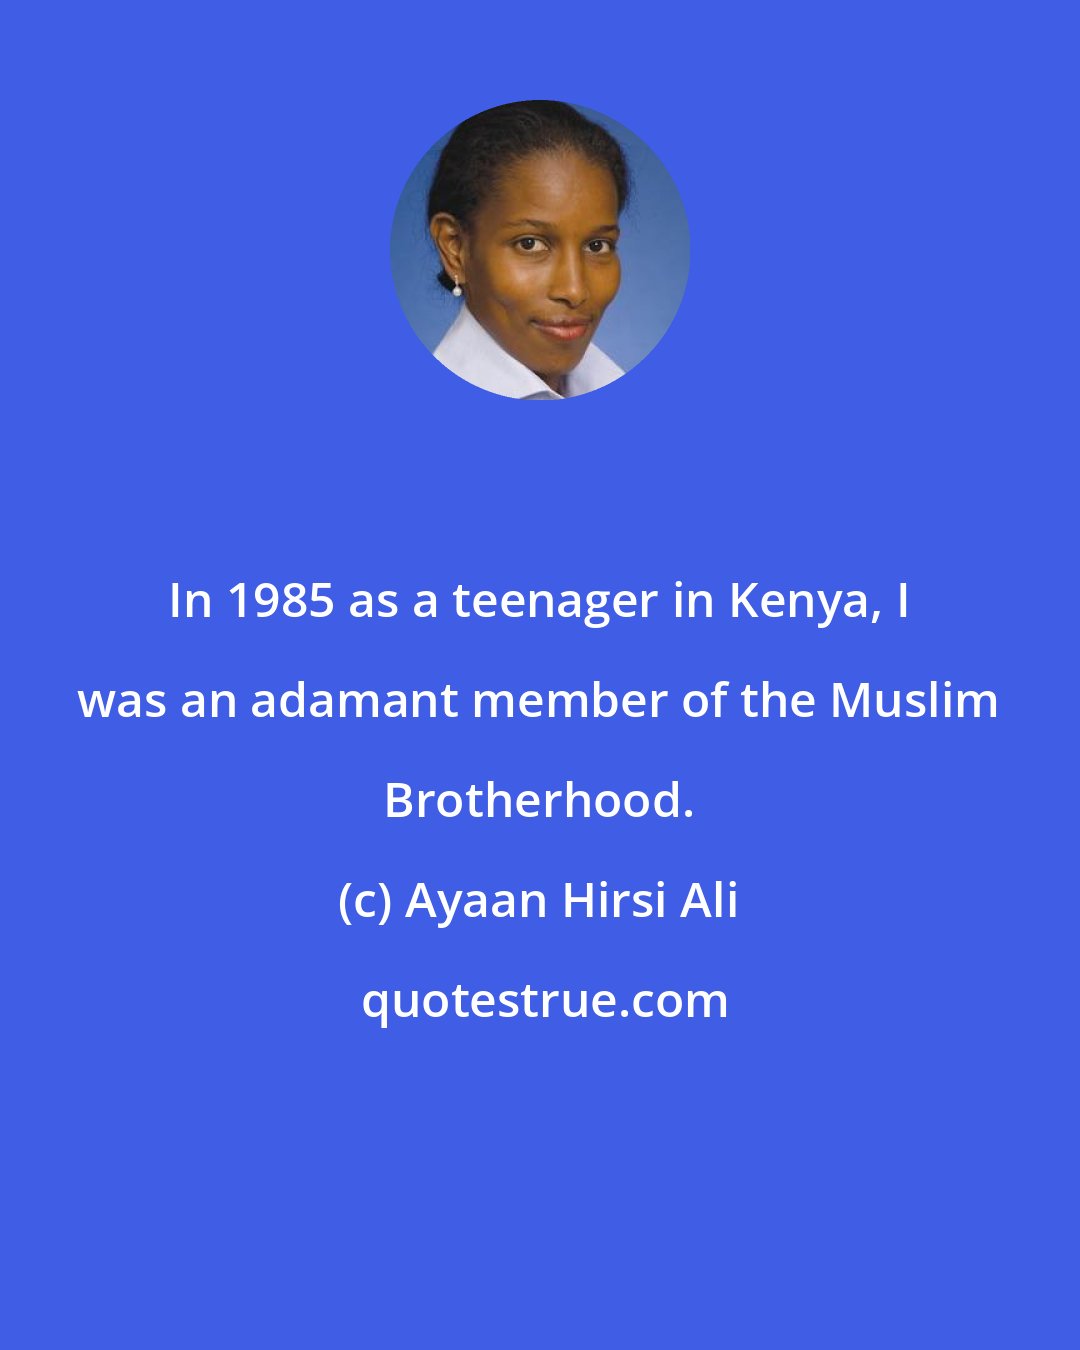 Ayaan Hirsi Ali: In 1985 as a teenager in Kenya, I was an adamant member of the Muslim Brotherhood.